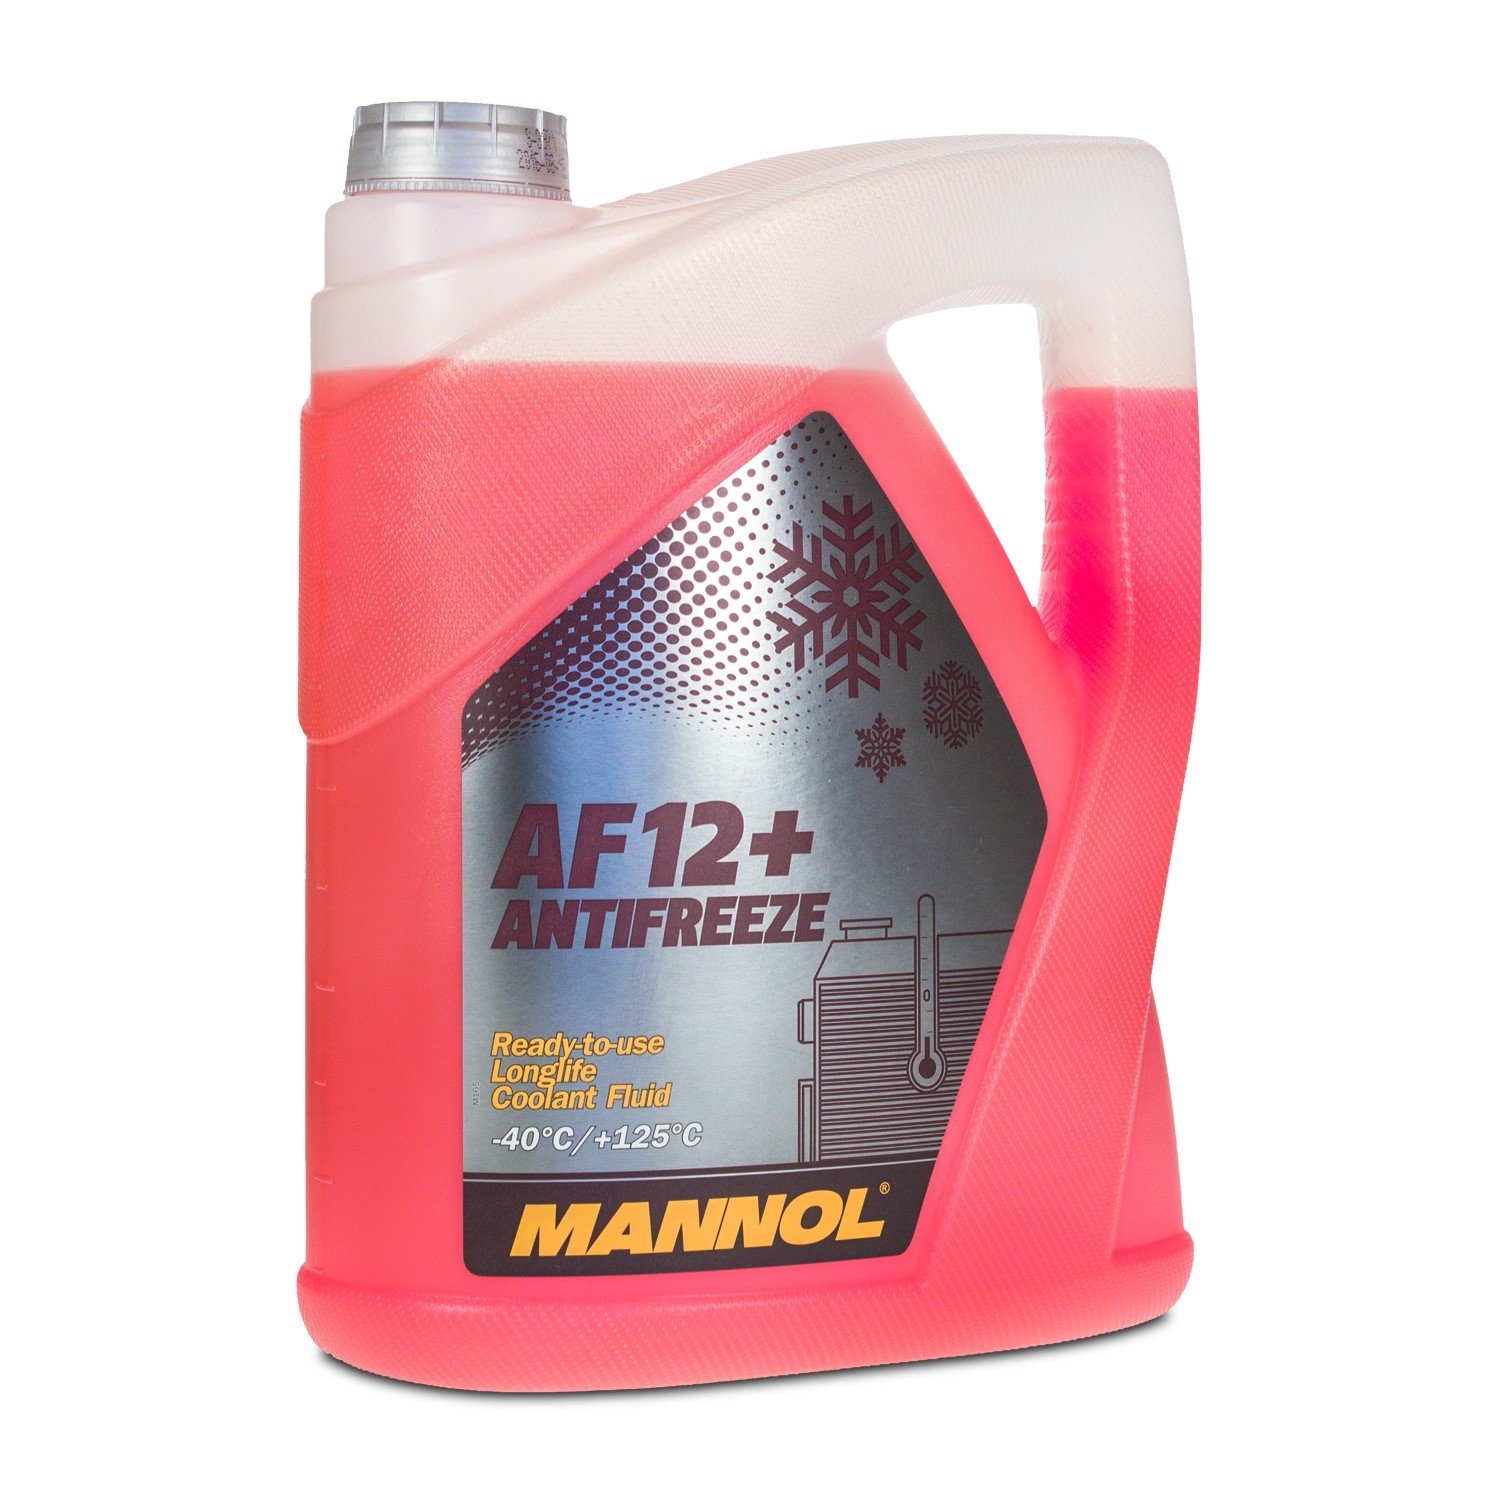 Mannol Antifreeze G12+ -40°C 5L